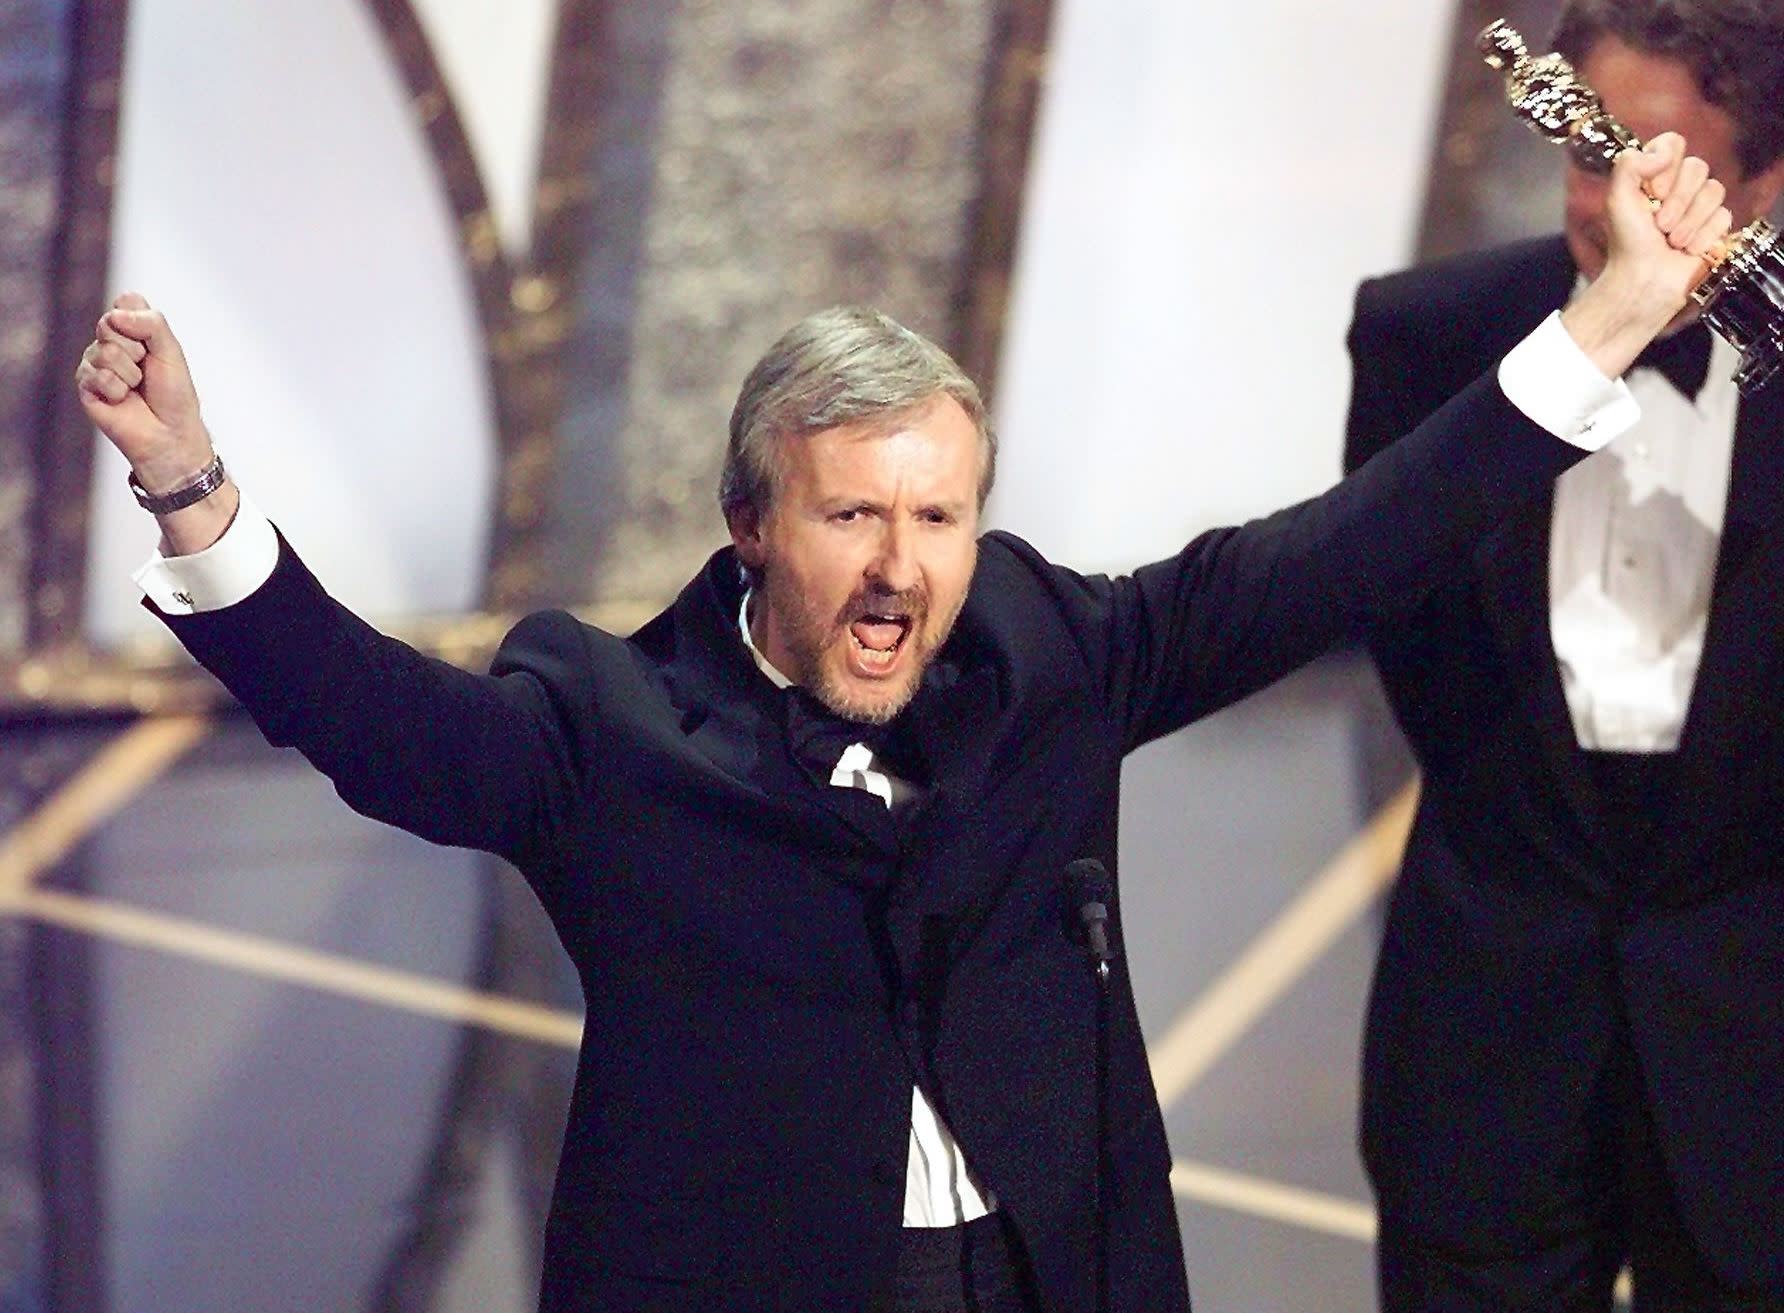 James Cameron's cringe-y 'king of the world' Oscar moment